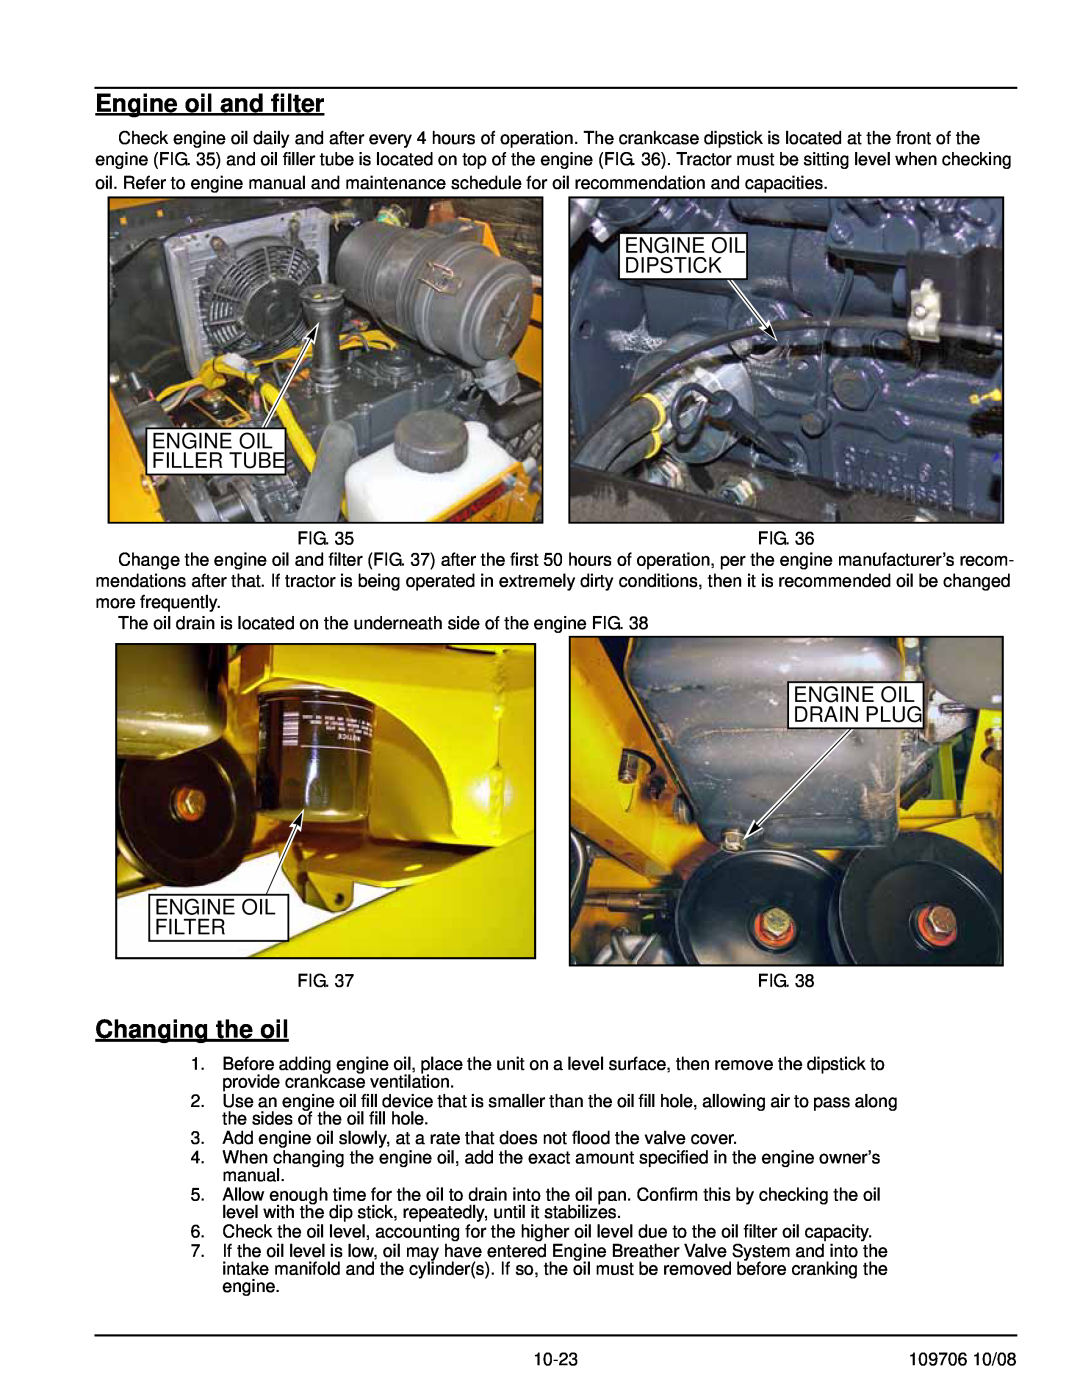 Hustler Turf Diesel Z manual Engine oil and filter, Changing the oil, Engine Oil Filler Tube, Engine Oil Dipstick 